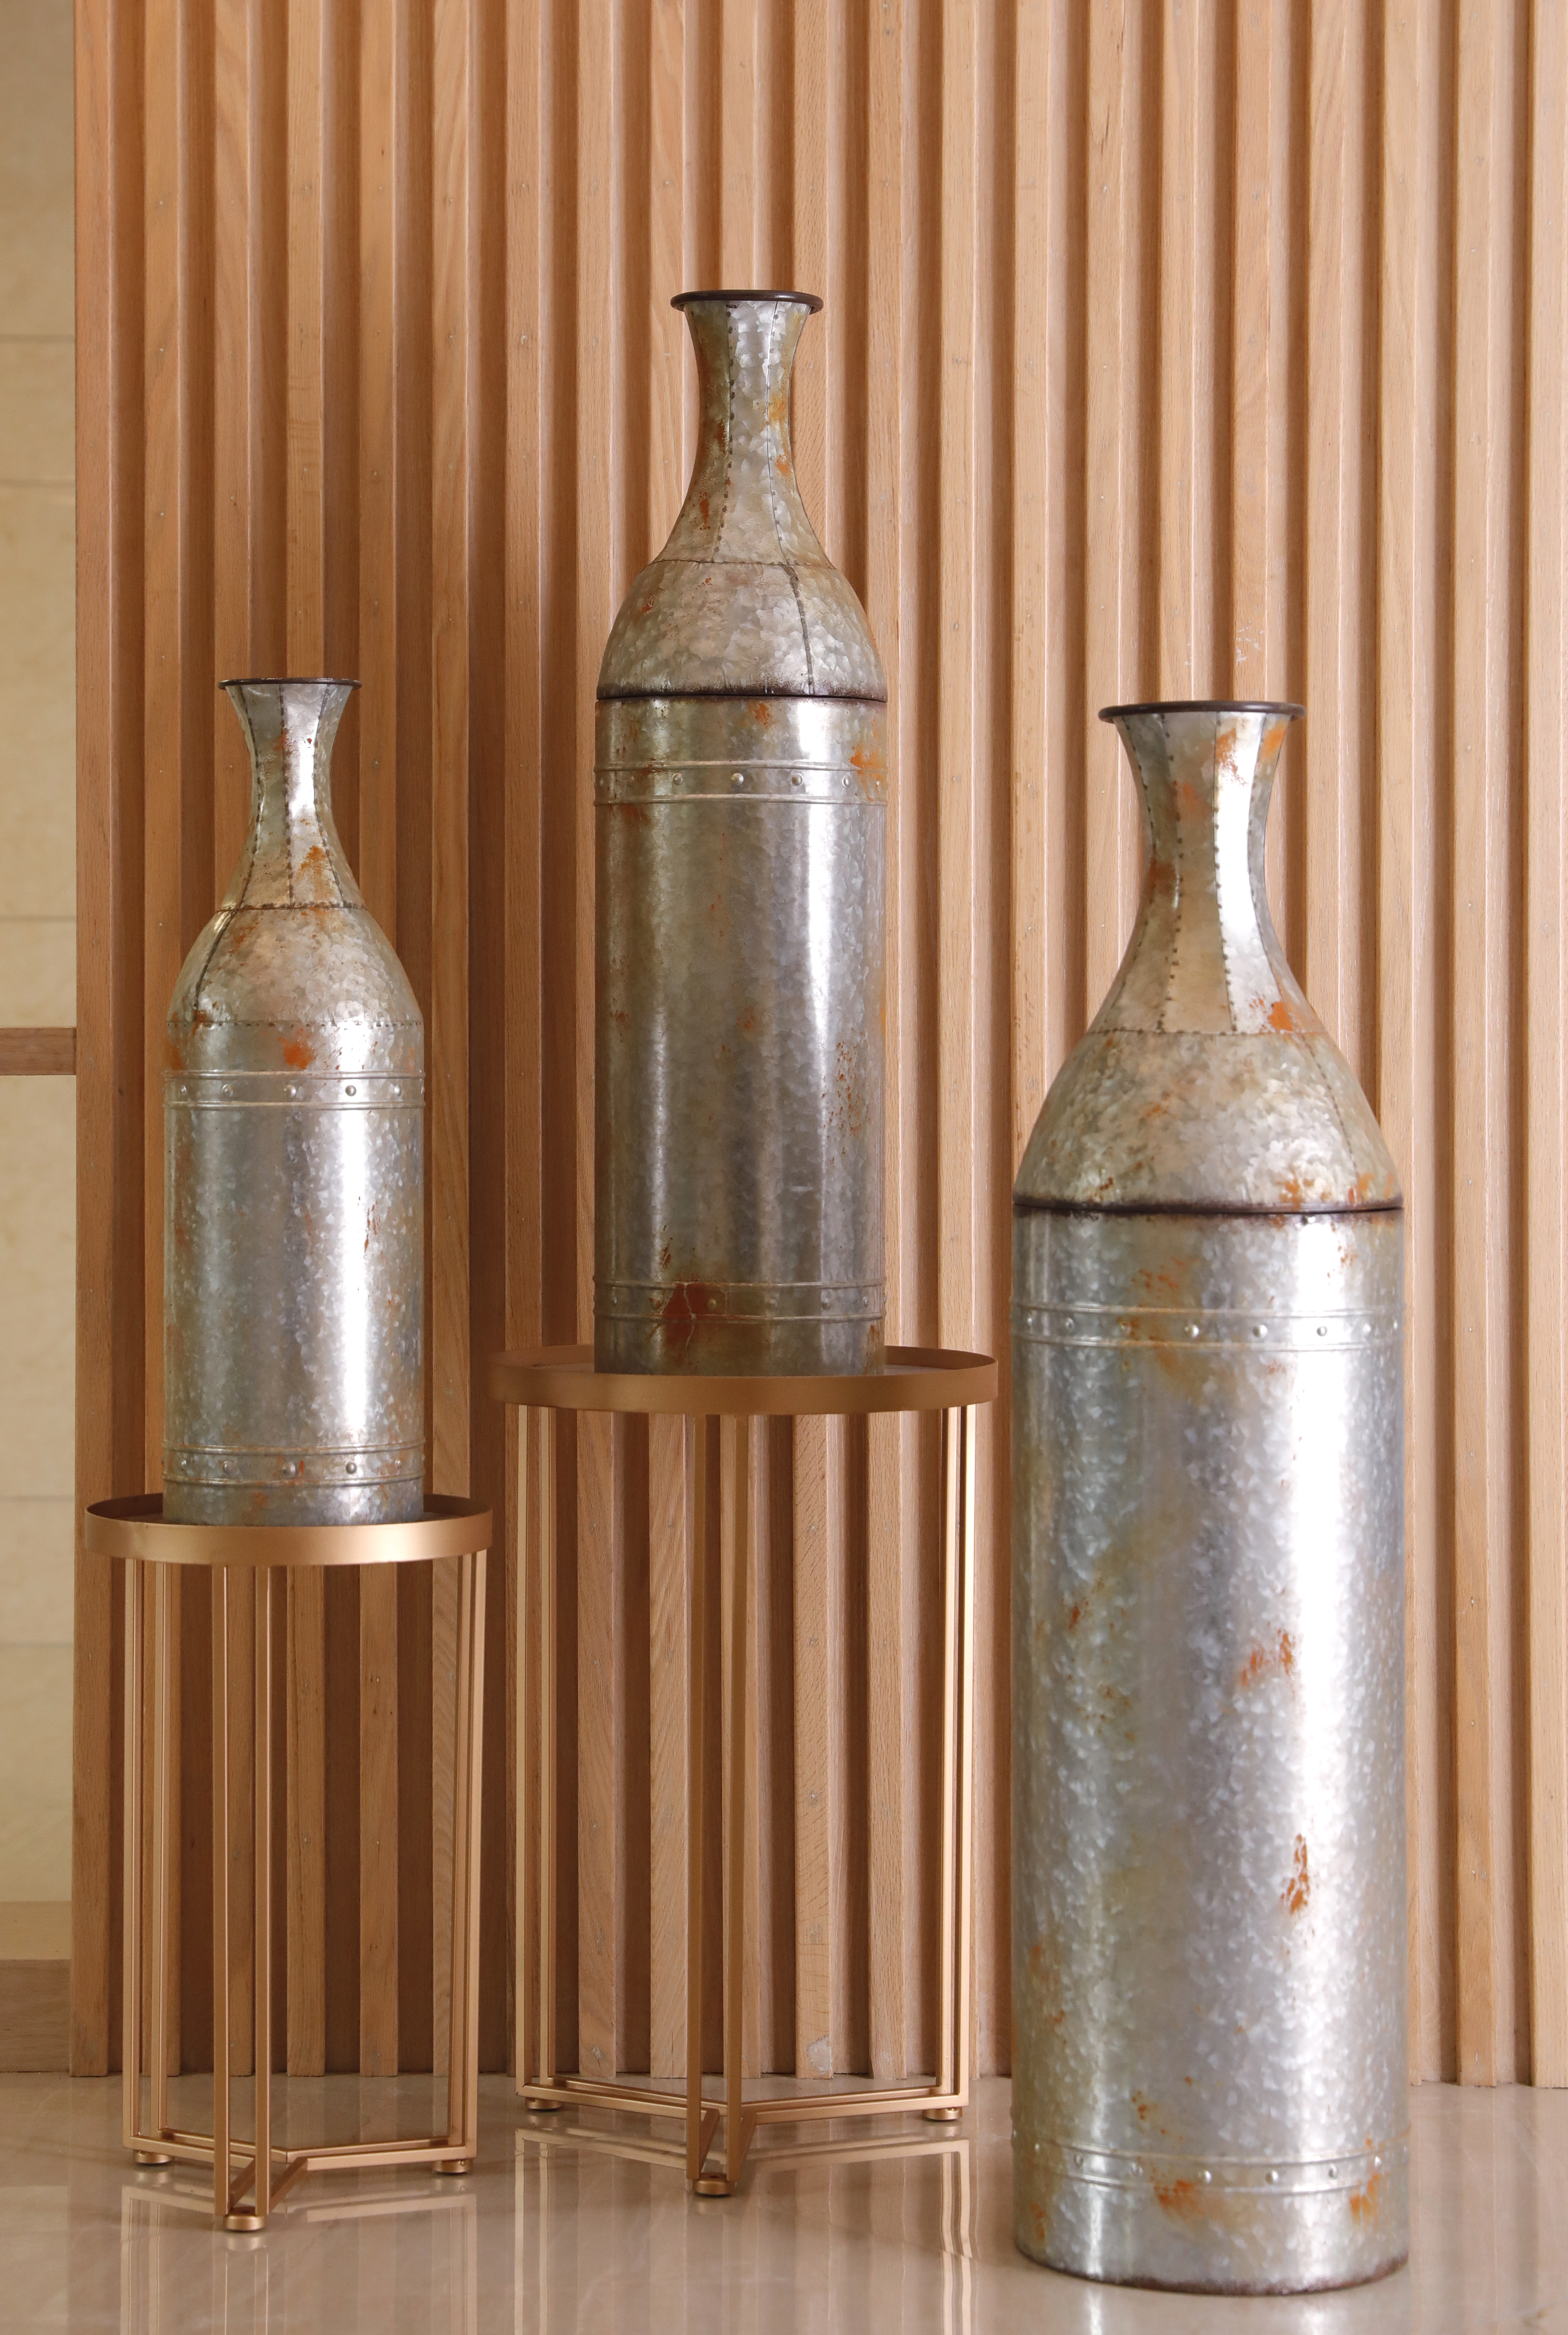 New Vintiquewise Rustic Farmhouse Style Galvanized Metal Floor Vase Decoration Ebay